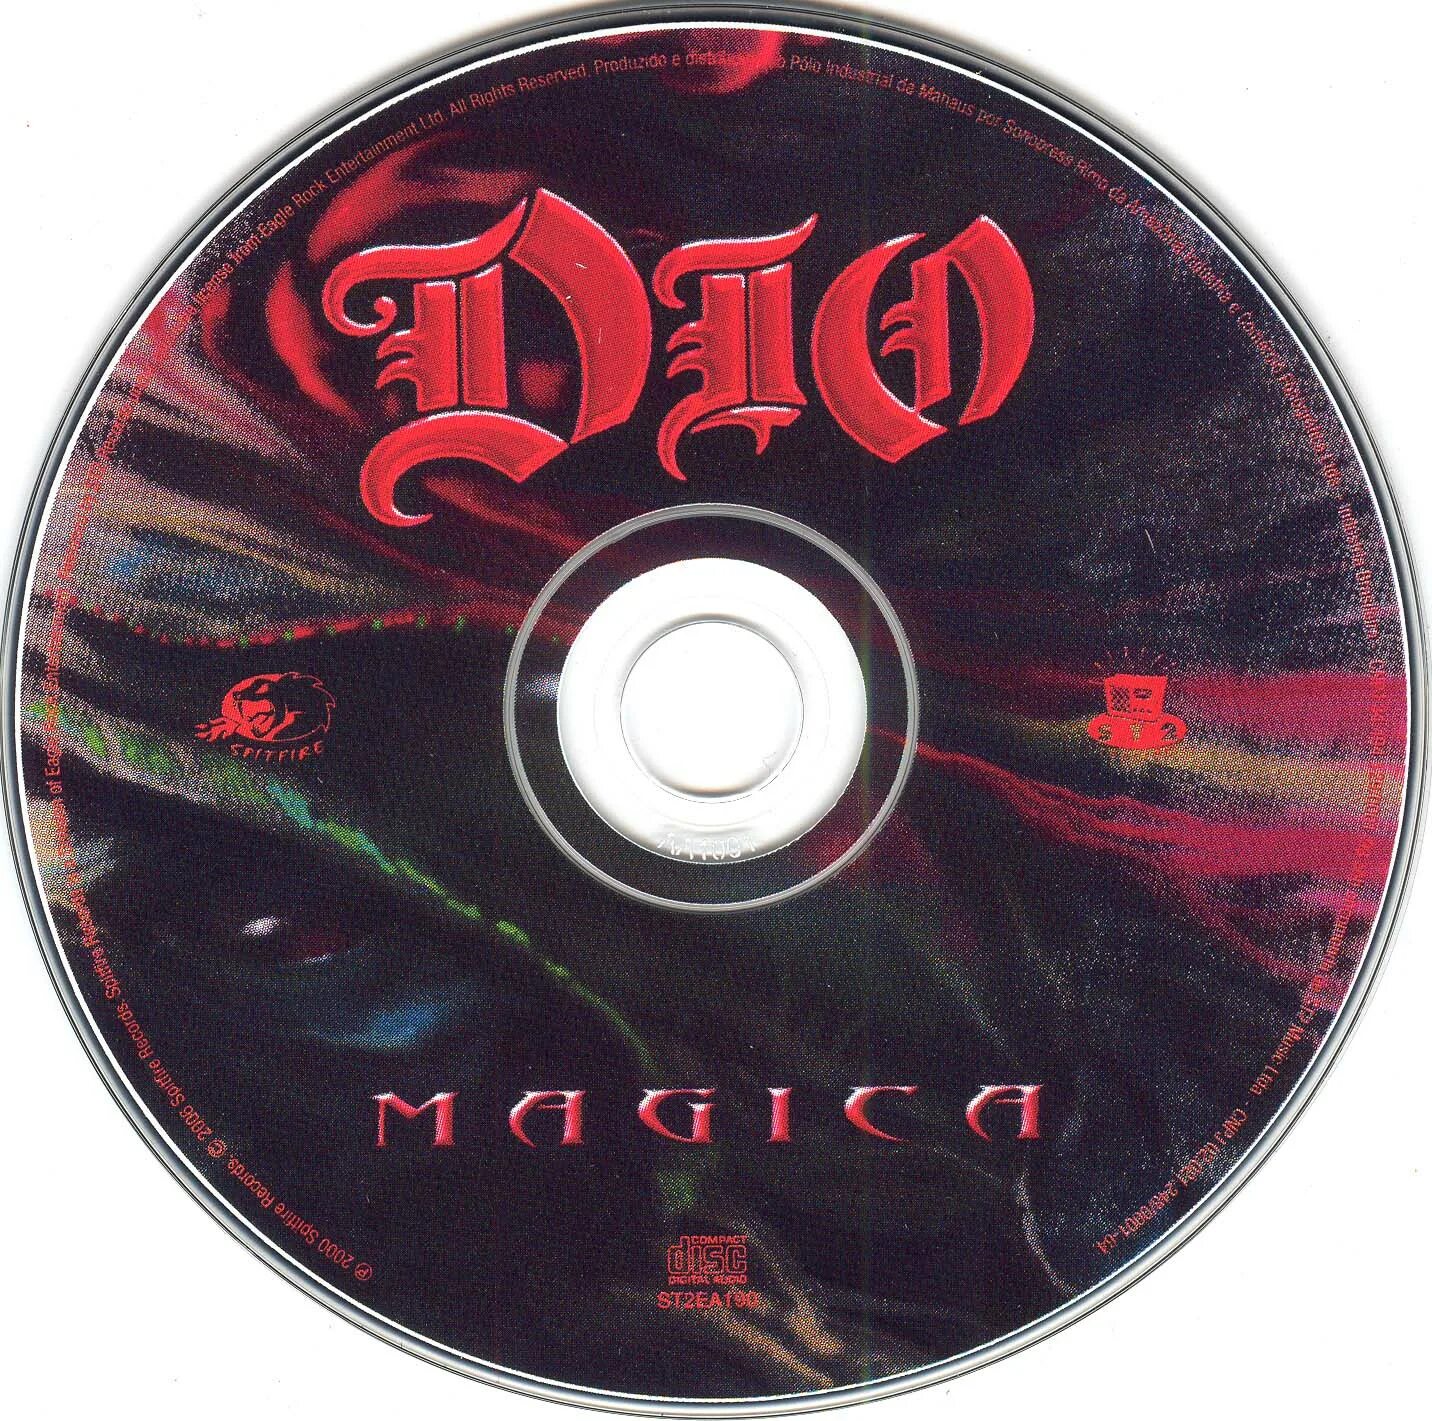 Dio mp3. Dio Magica 2000 обложка CD. Ronnie James Dio - (2000) - Magica. Dio дискография. Dio группа обложки.